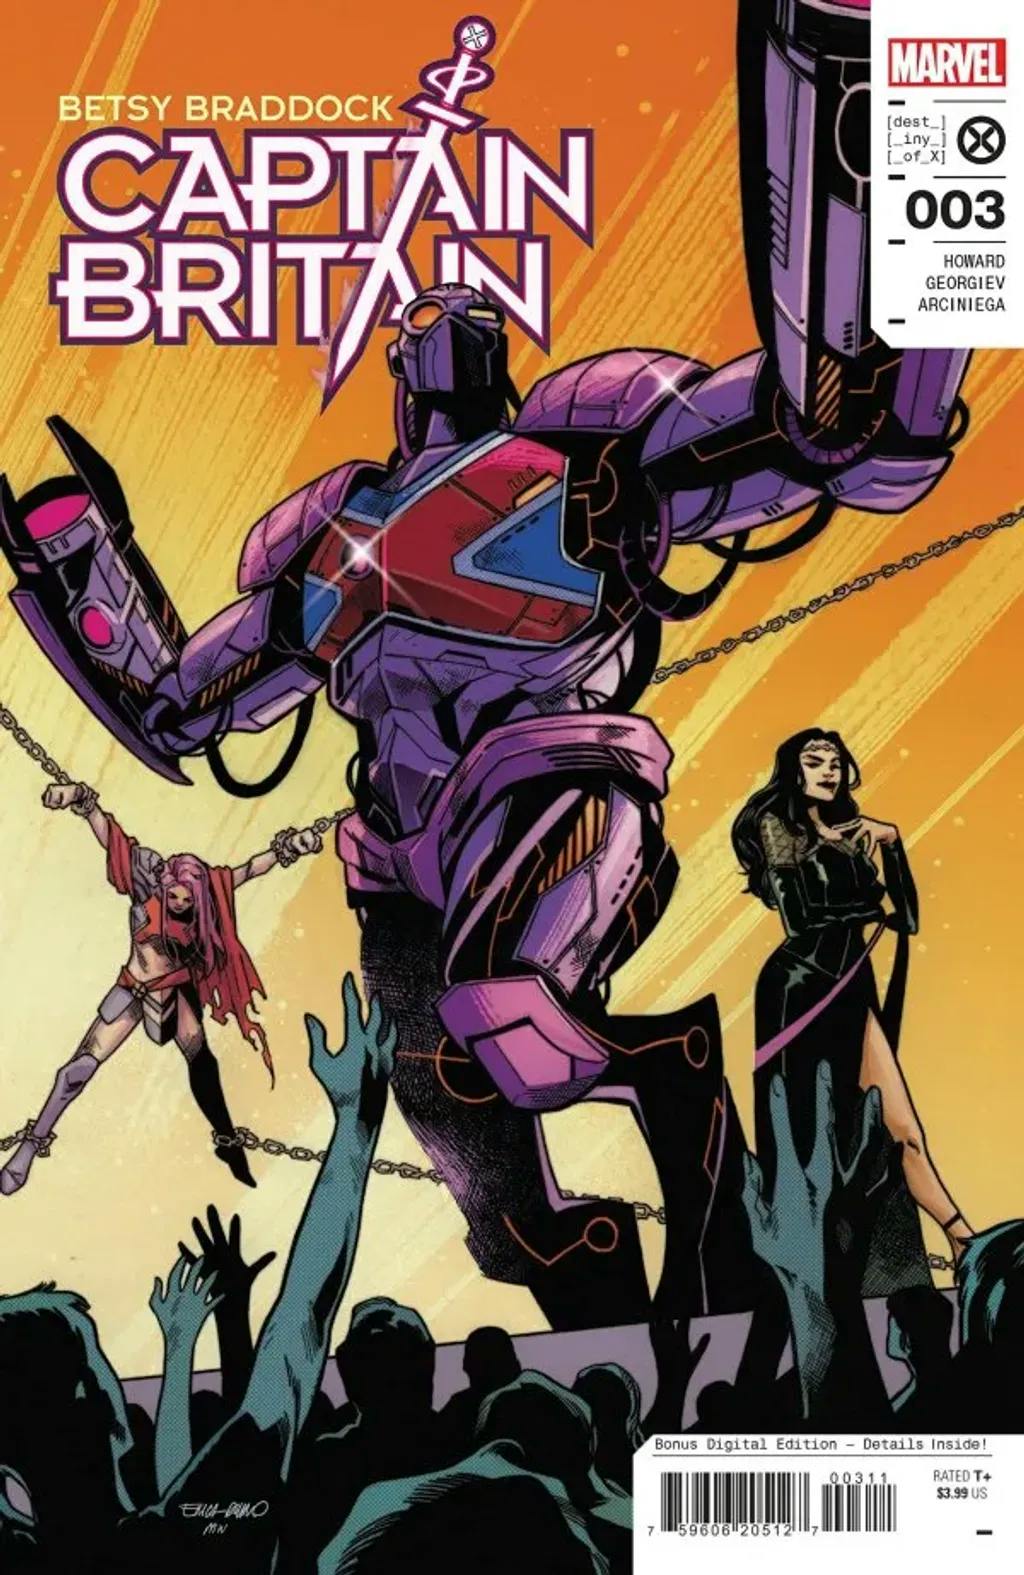 Betsy Braddock: Captain Britain #3 By Tini Howard, Vasco Georgiev, and Erick Arciniega